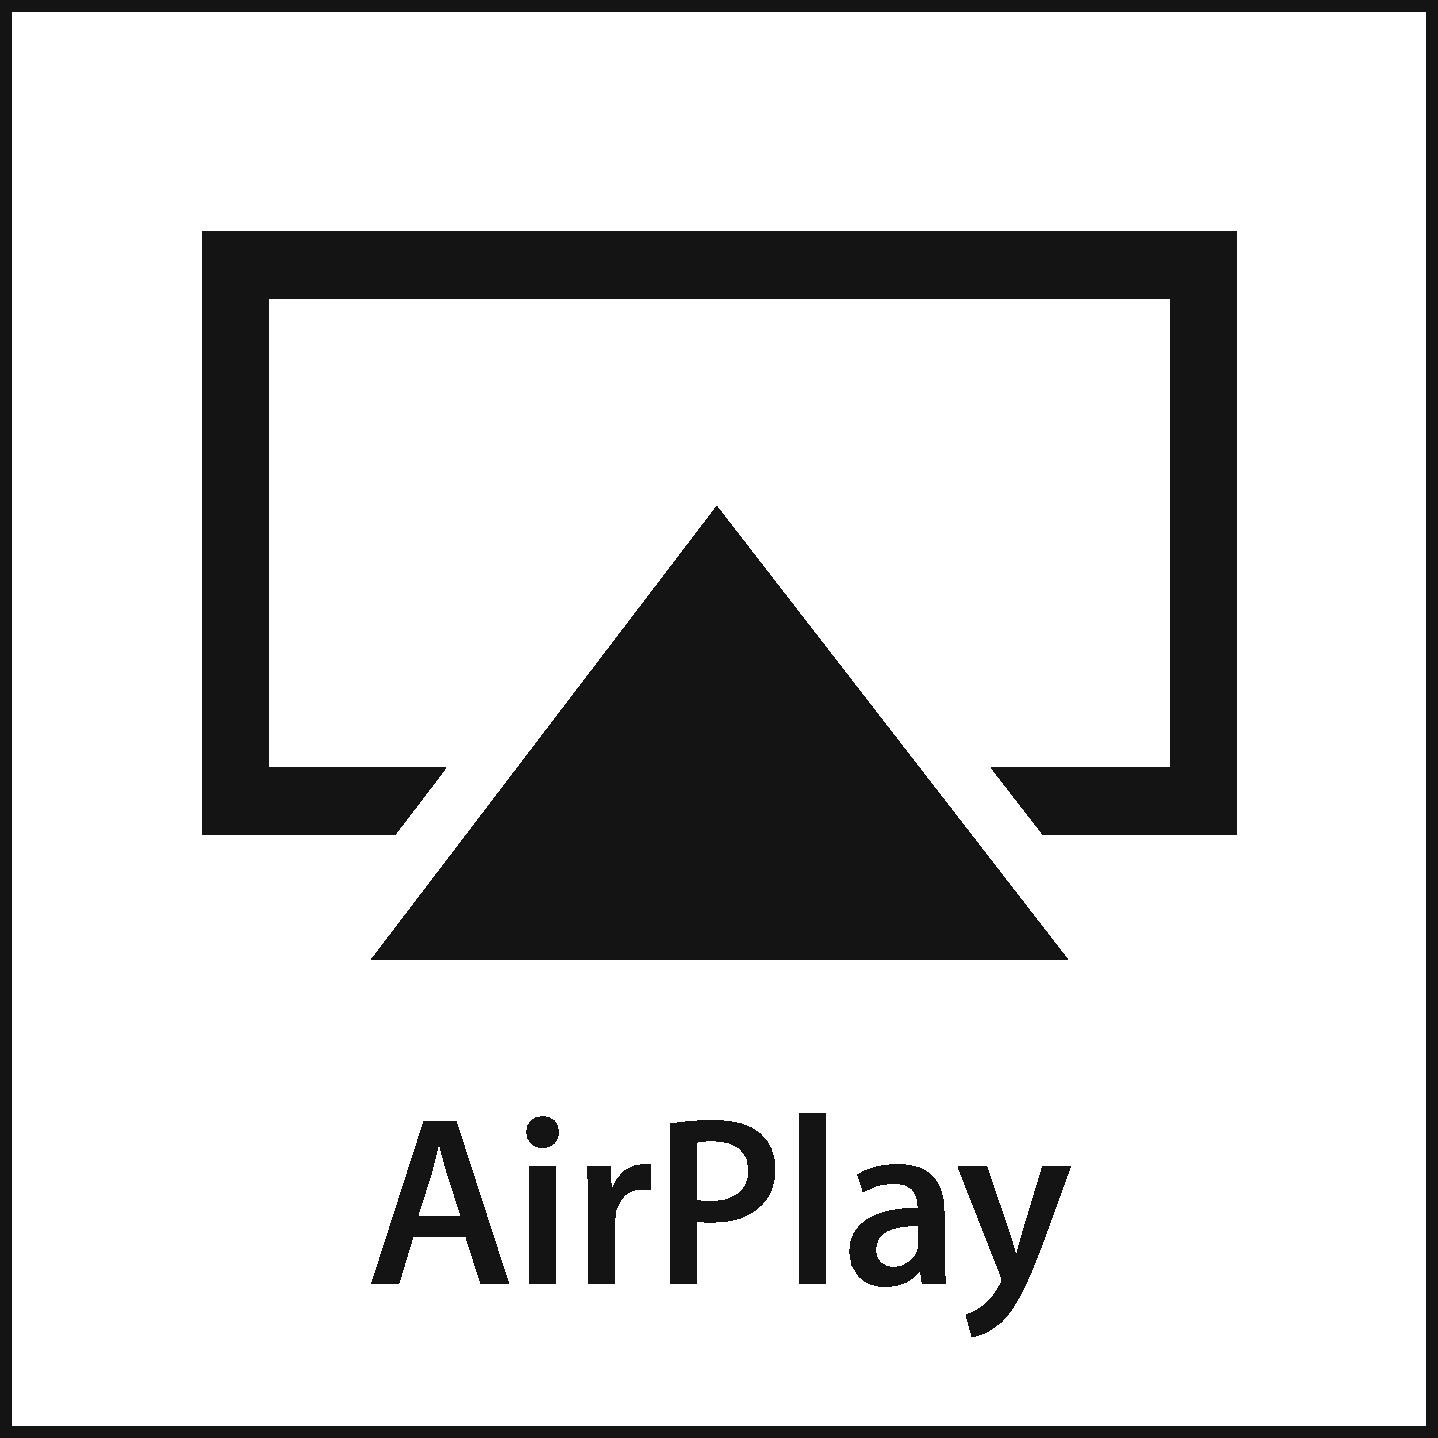 airplay 2 vs airplay, airplay 2 vs 1